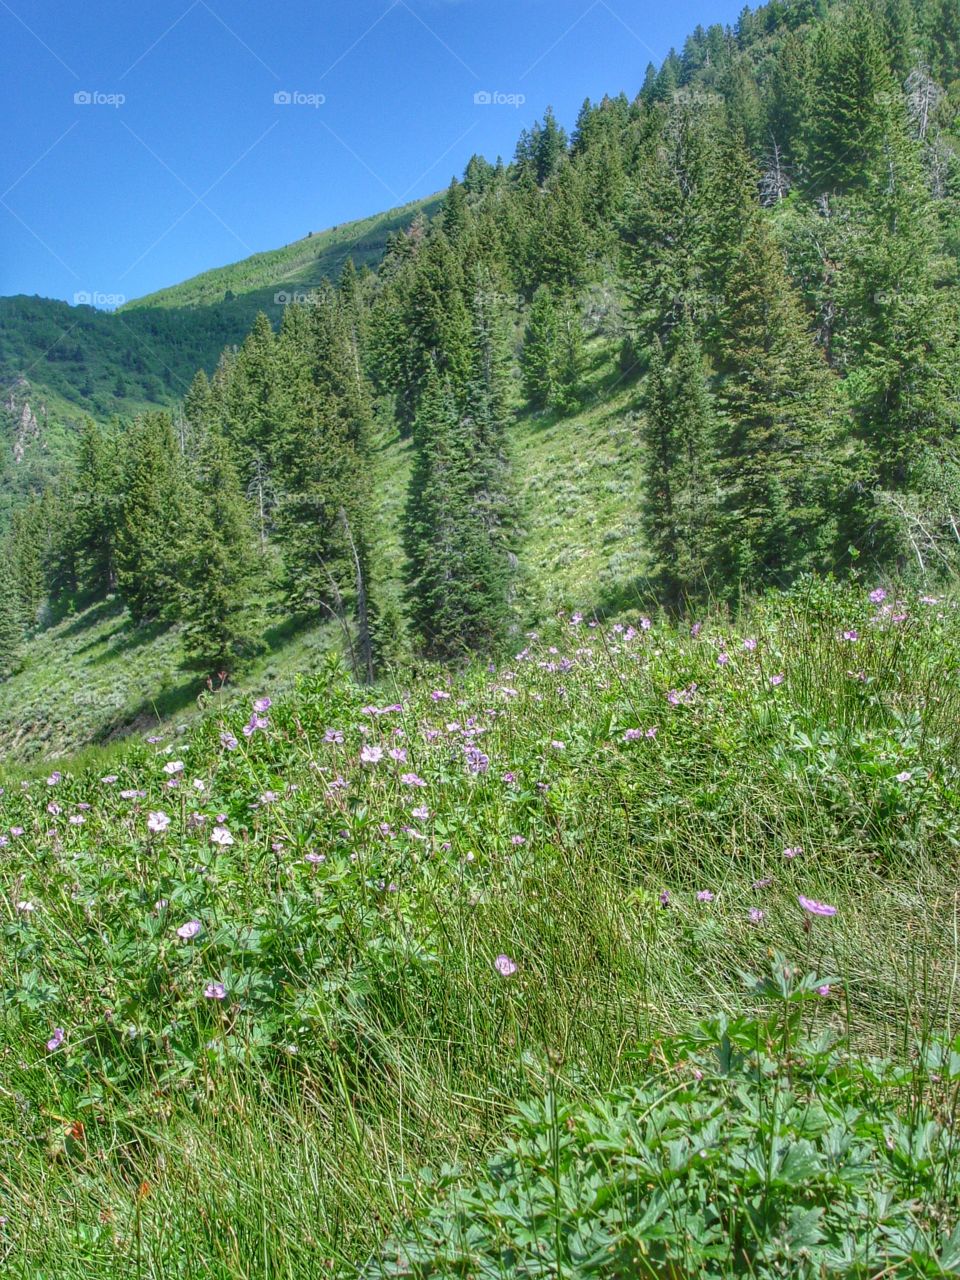 View of trees growing in hillside